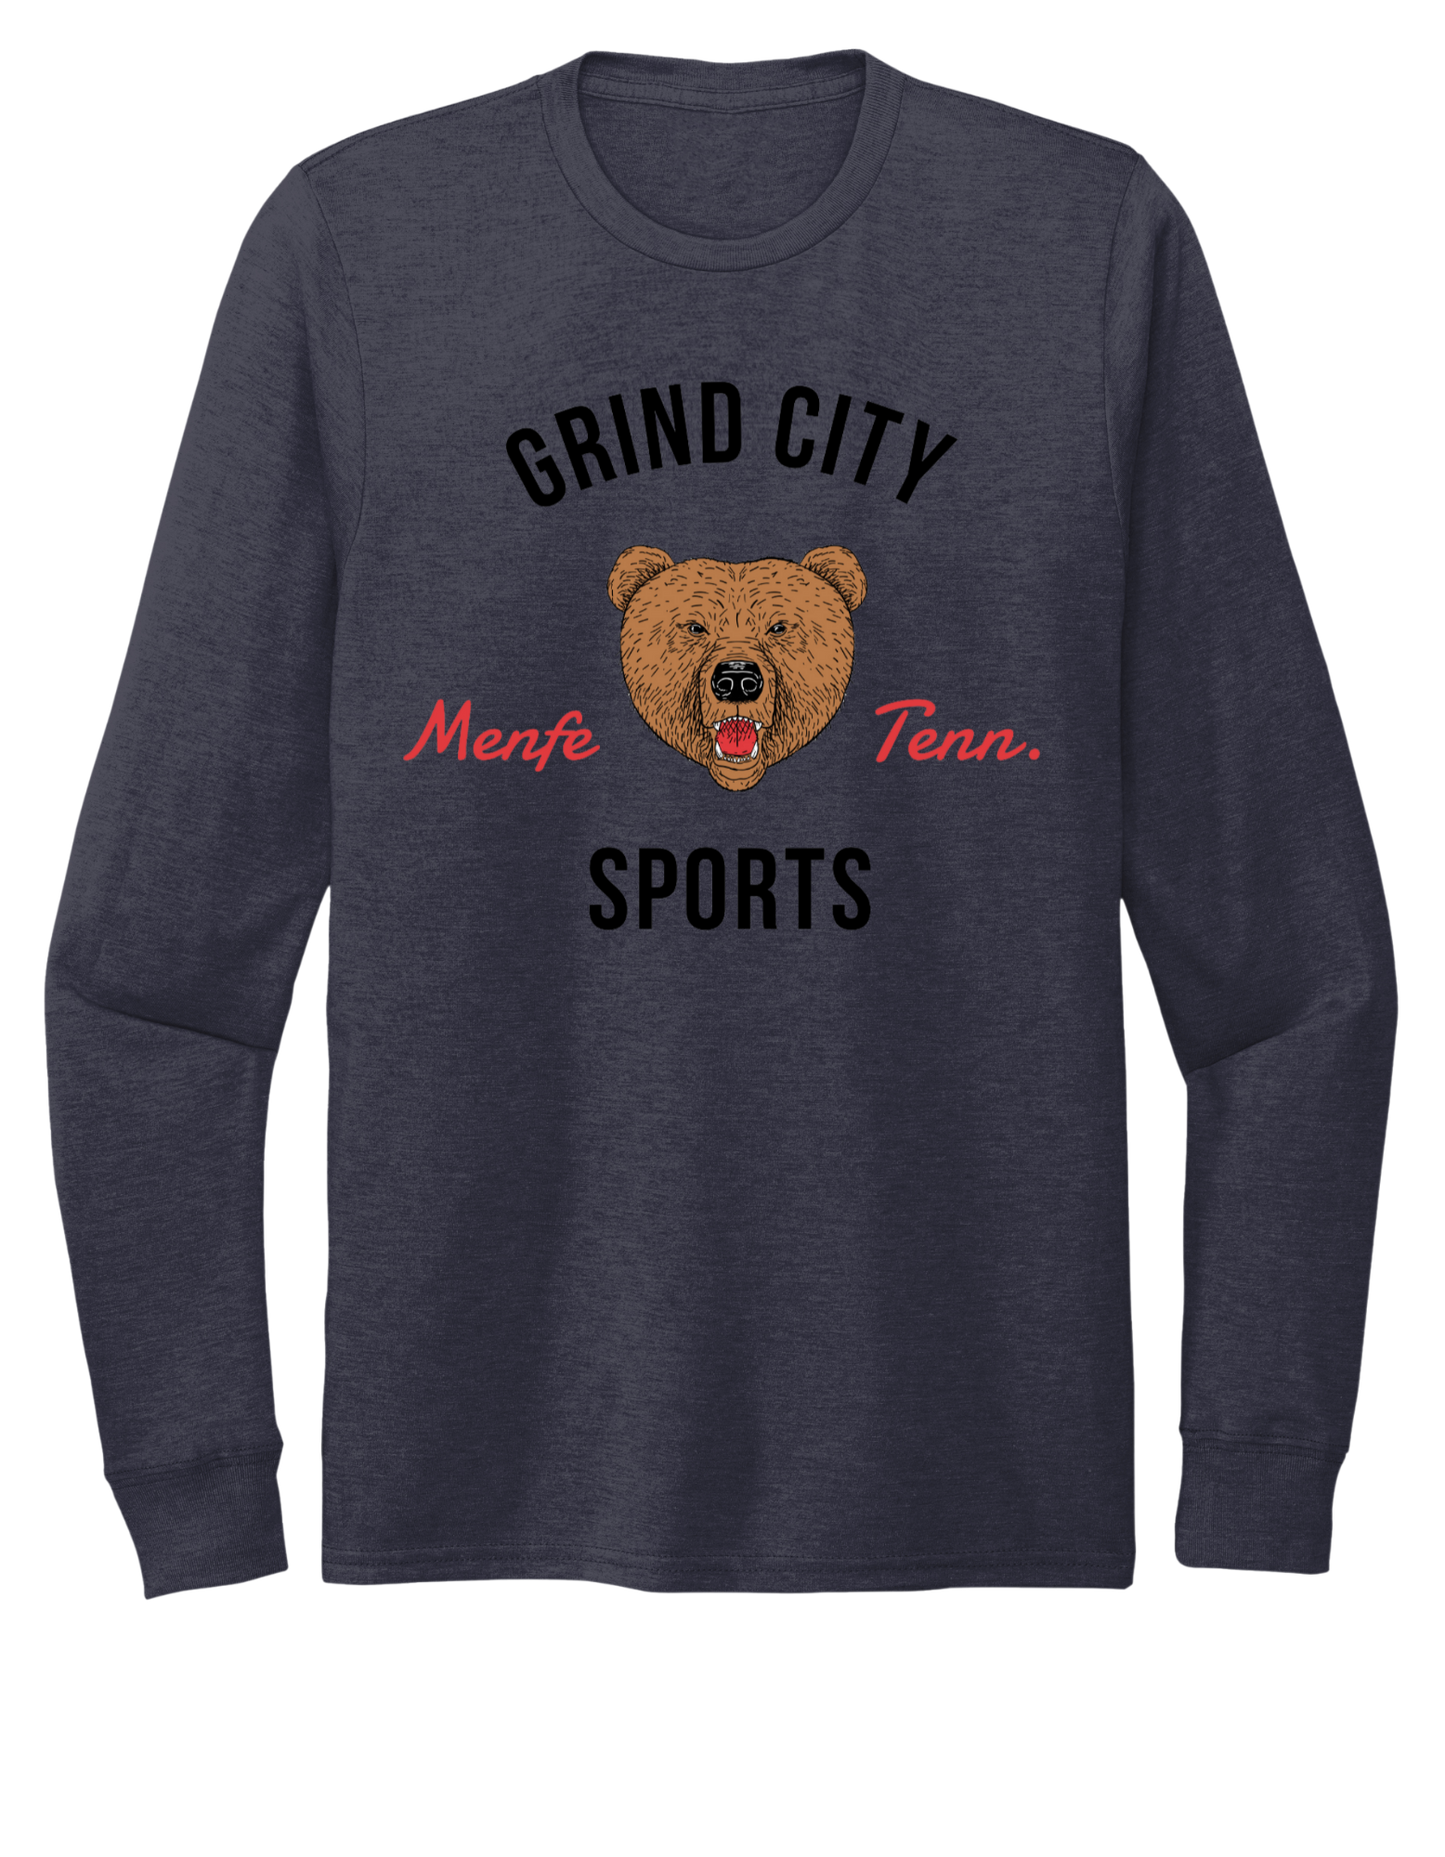 Grind City Sports Long Sleeve - Navy Blue